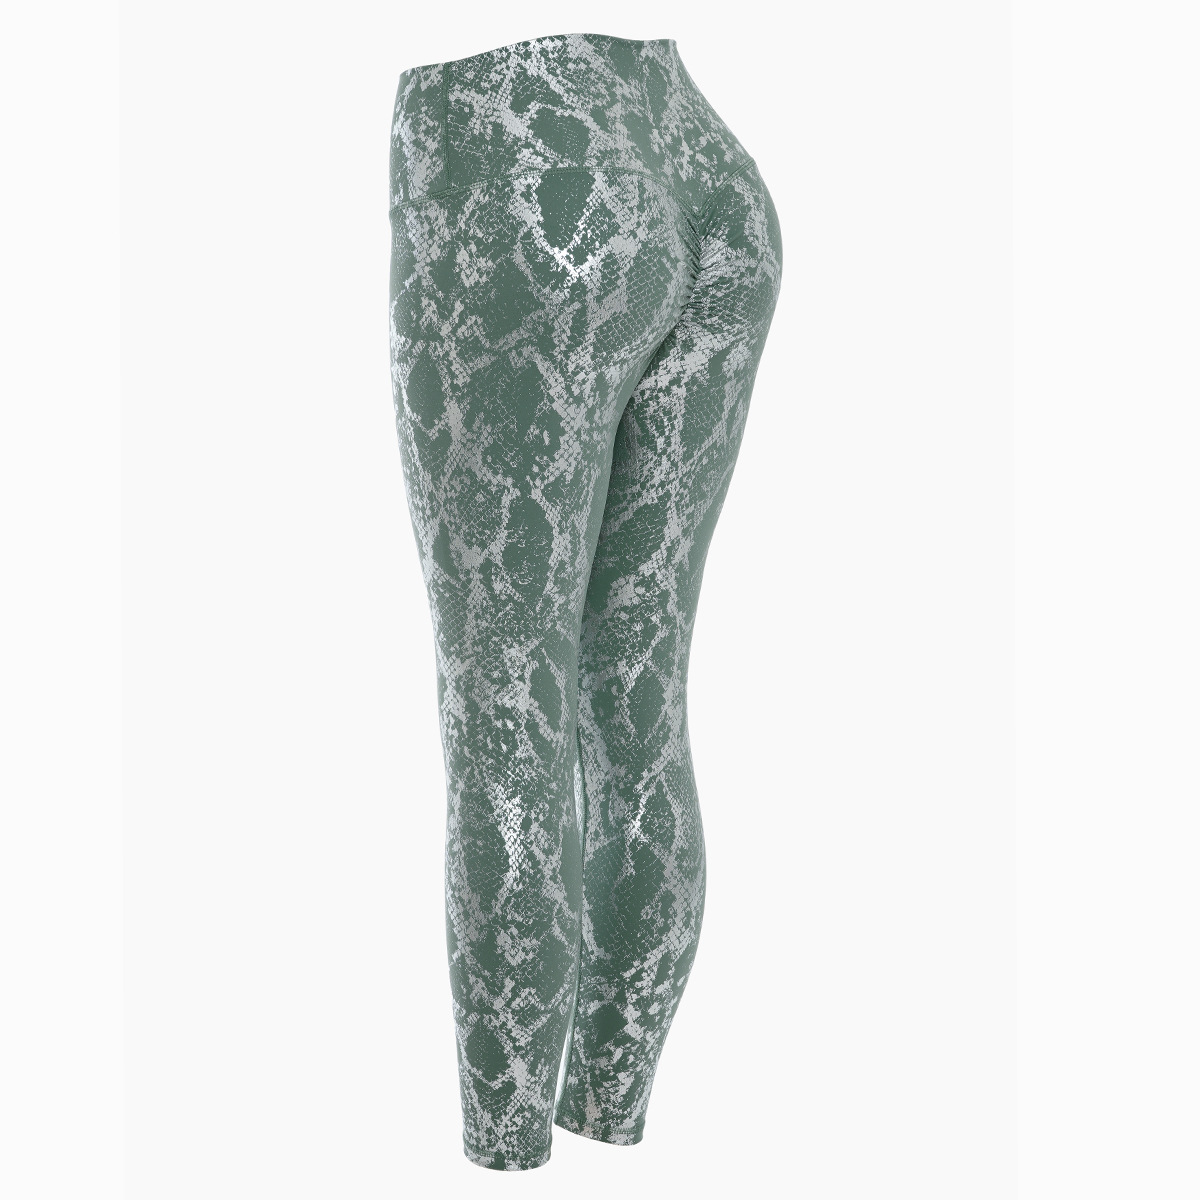 YELETE Women's Snakeskin Print Peach Skin Leggings - Plus Size